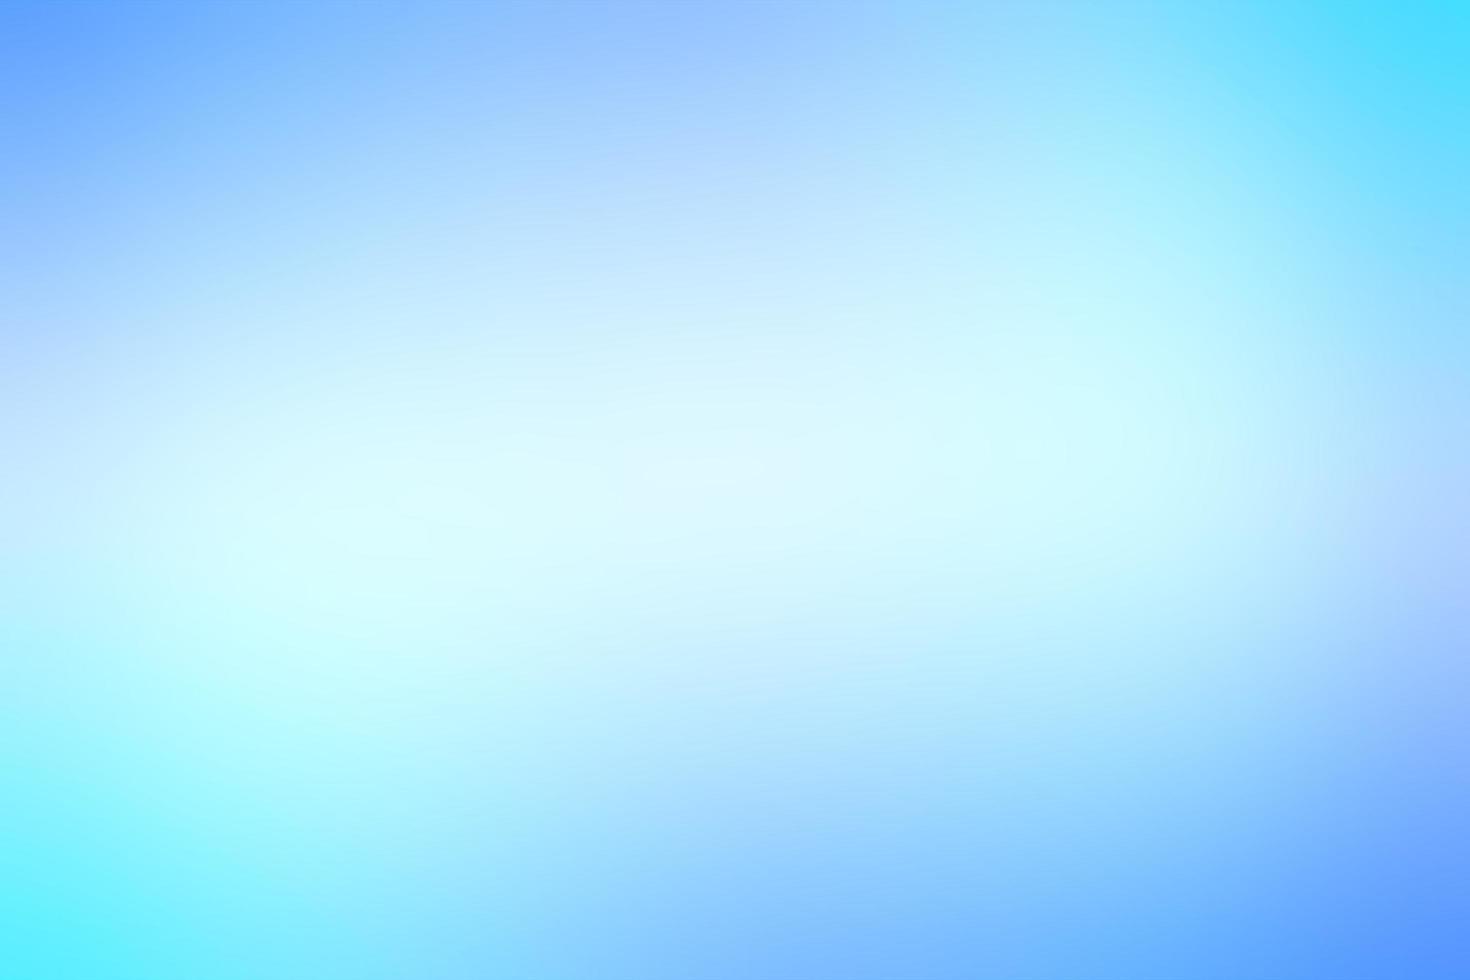 abstrakt suddig ljusblå kricka bakgrund. vintage stil, mjuk bakgrund foto